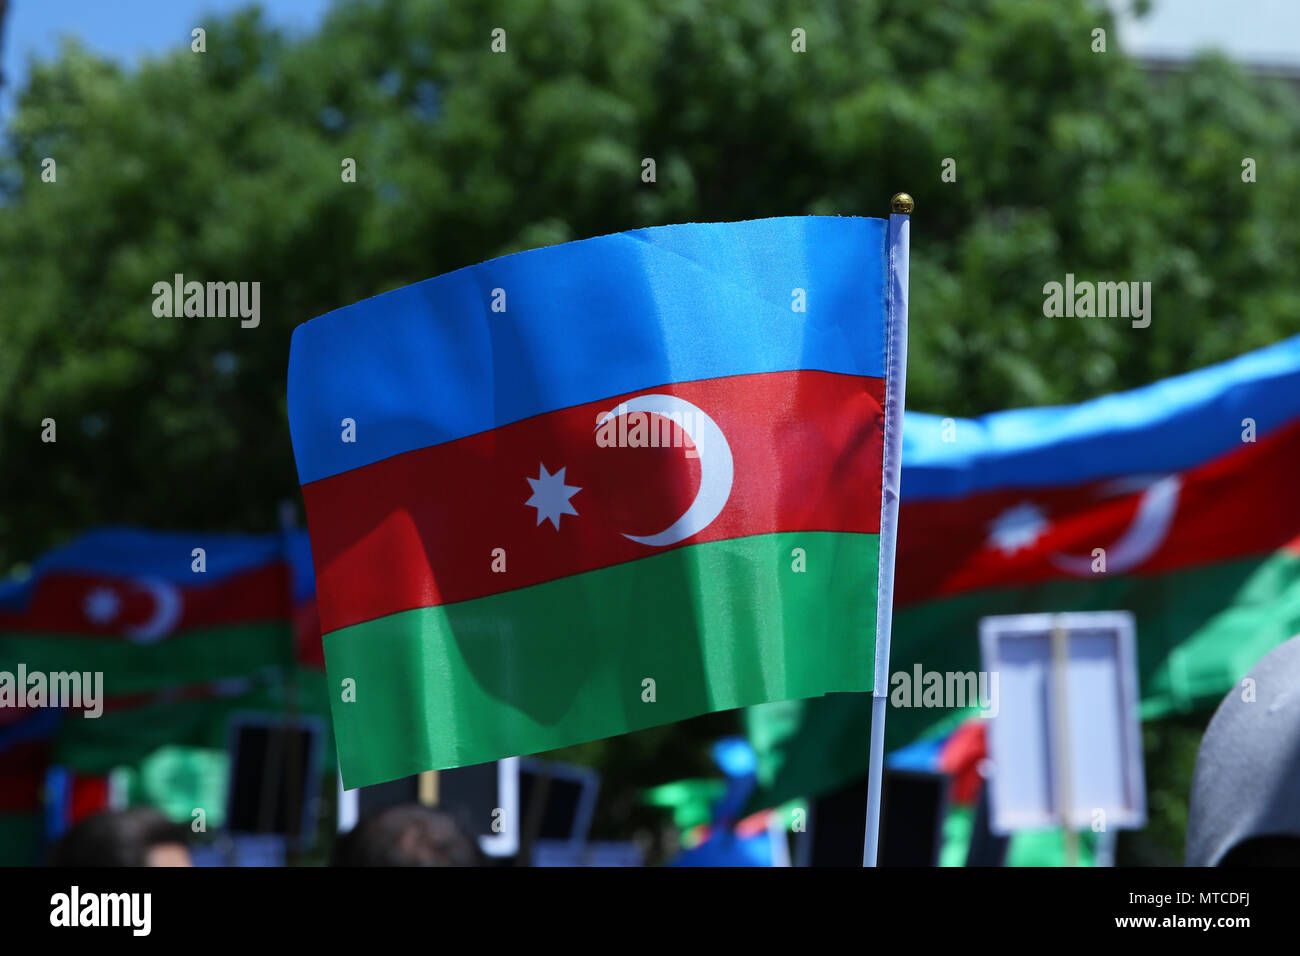 Azerbaijan flag in Baku, Azerbaijan. National sign background. Red Green Blue flag. Azerbaijan national flag with Crescent moon. Azerbaijan tradition  Stock Photo